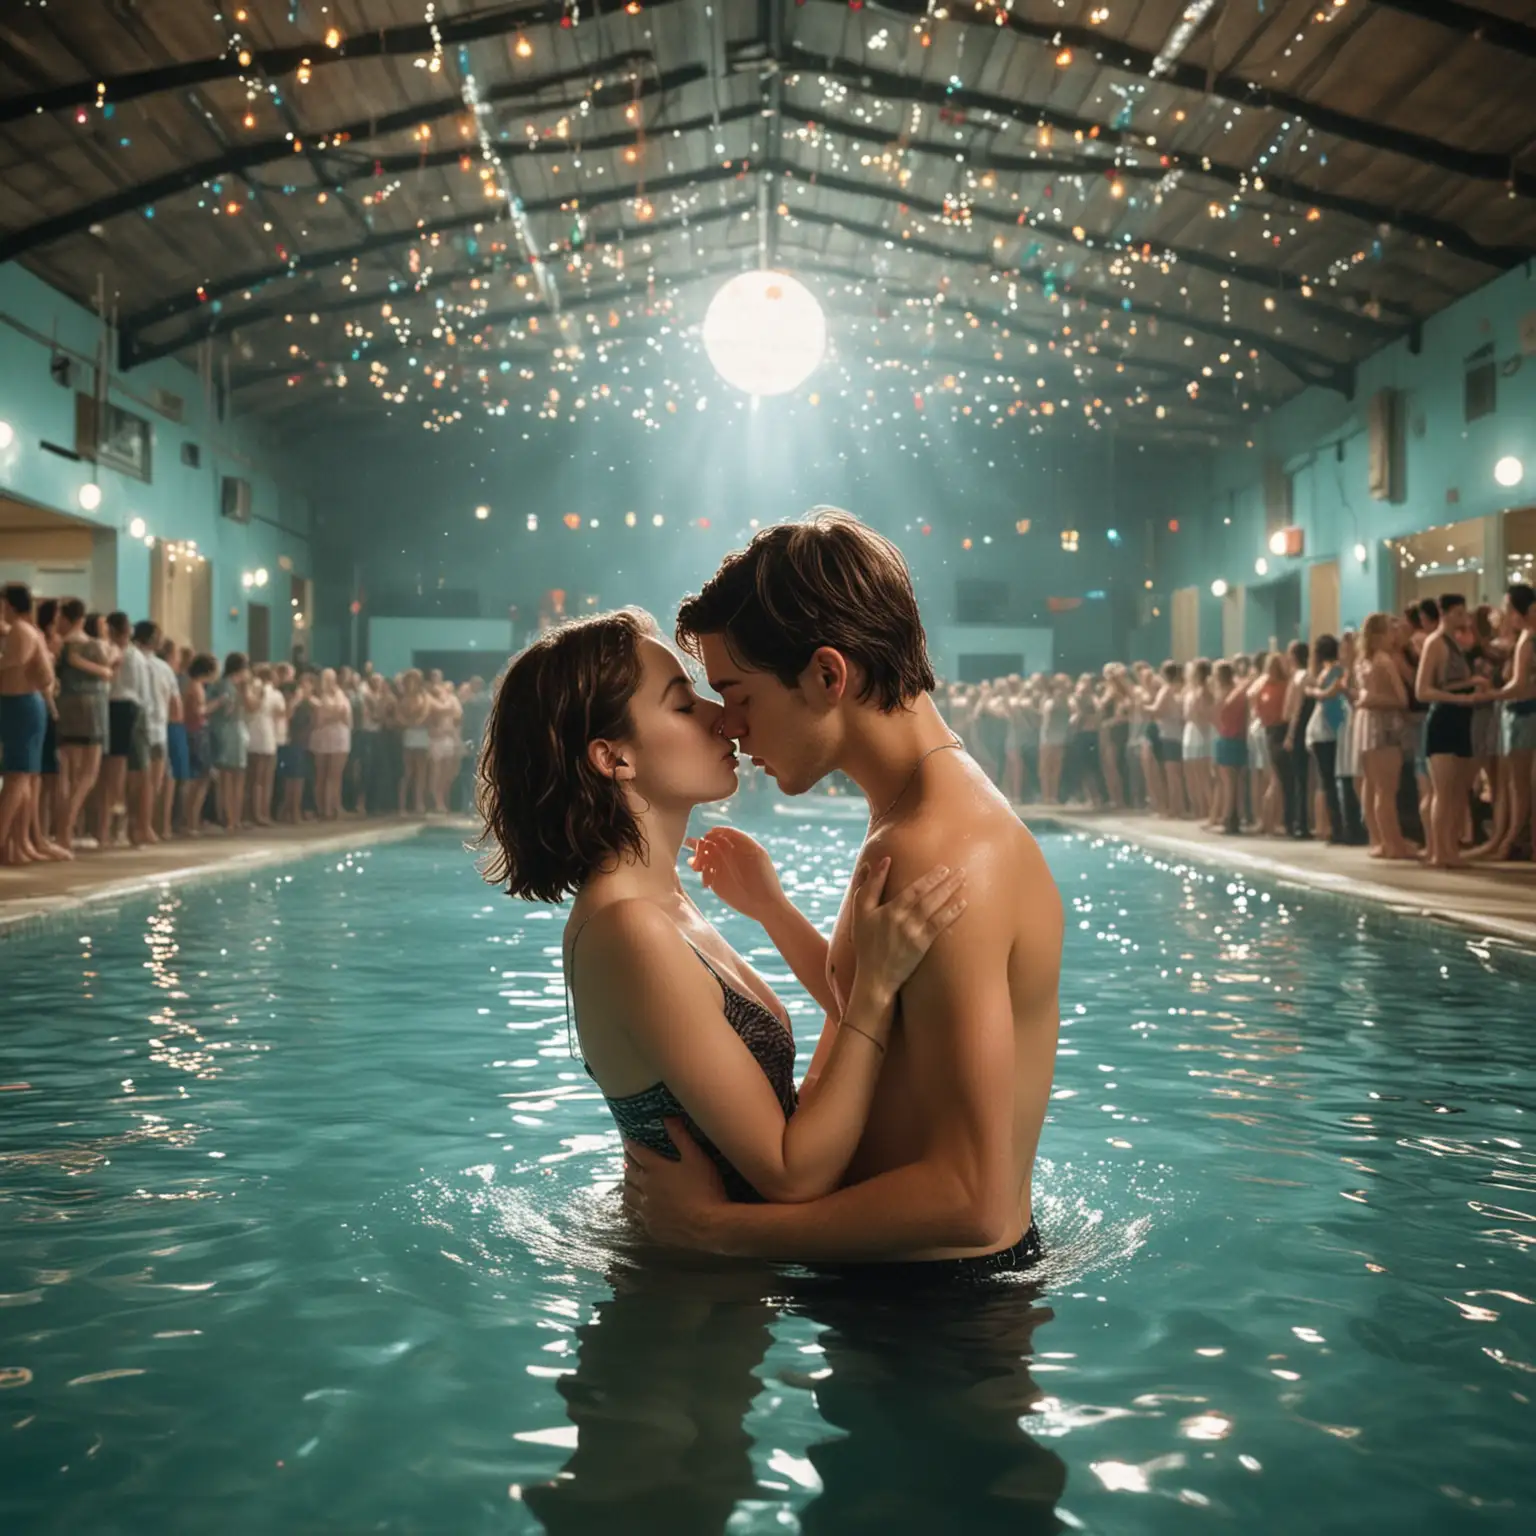 Romantic-Kiss-in-a-Vibrant-Dance-Hall-Pool